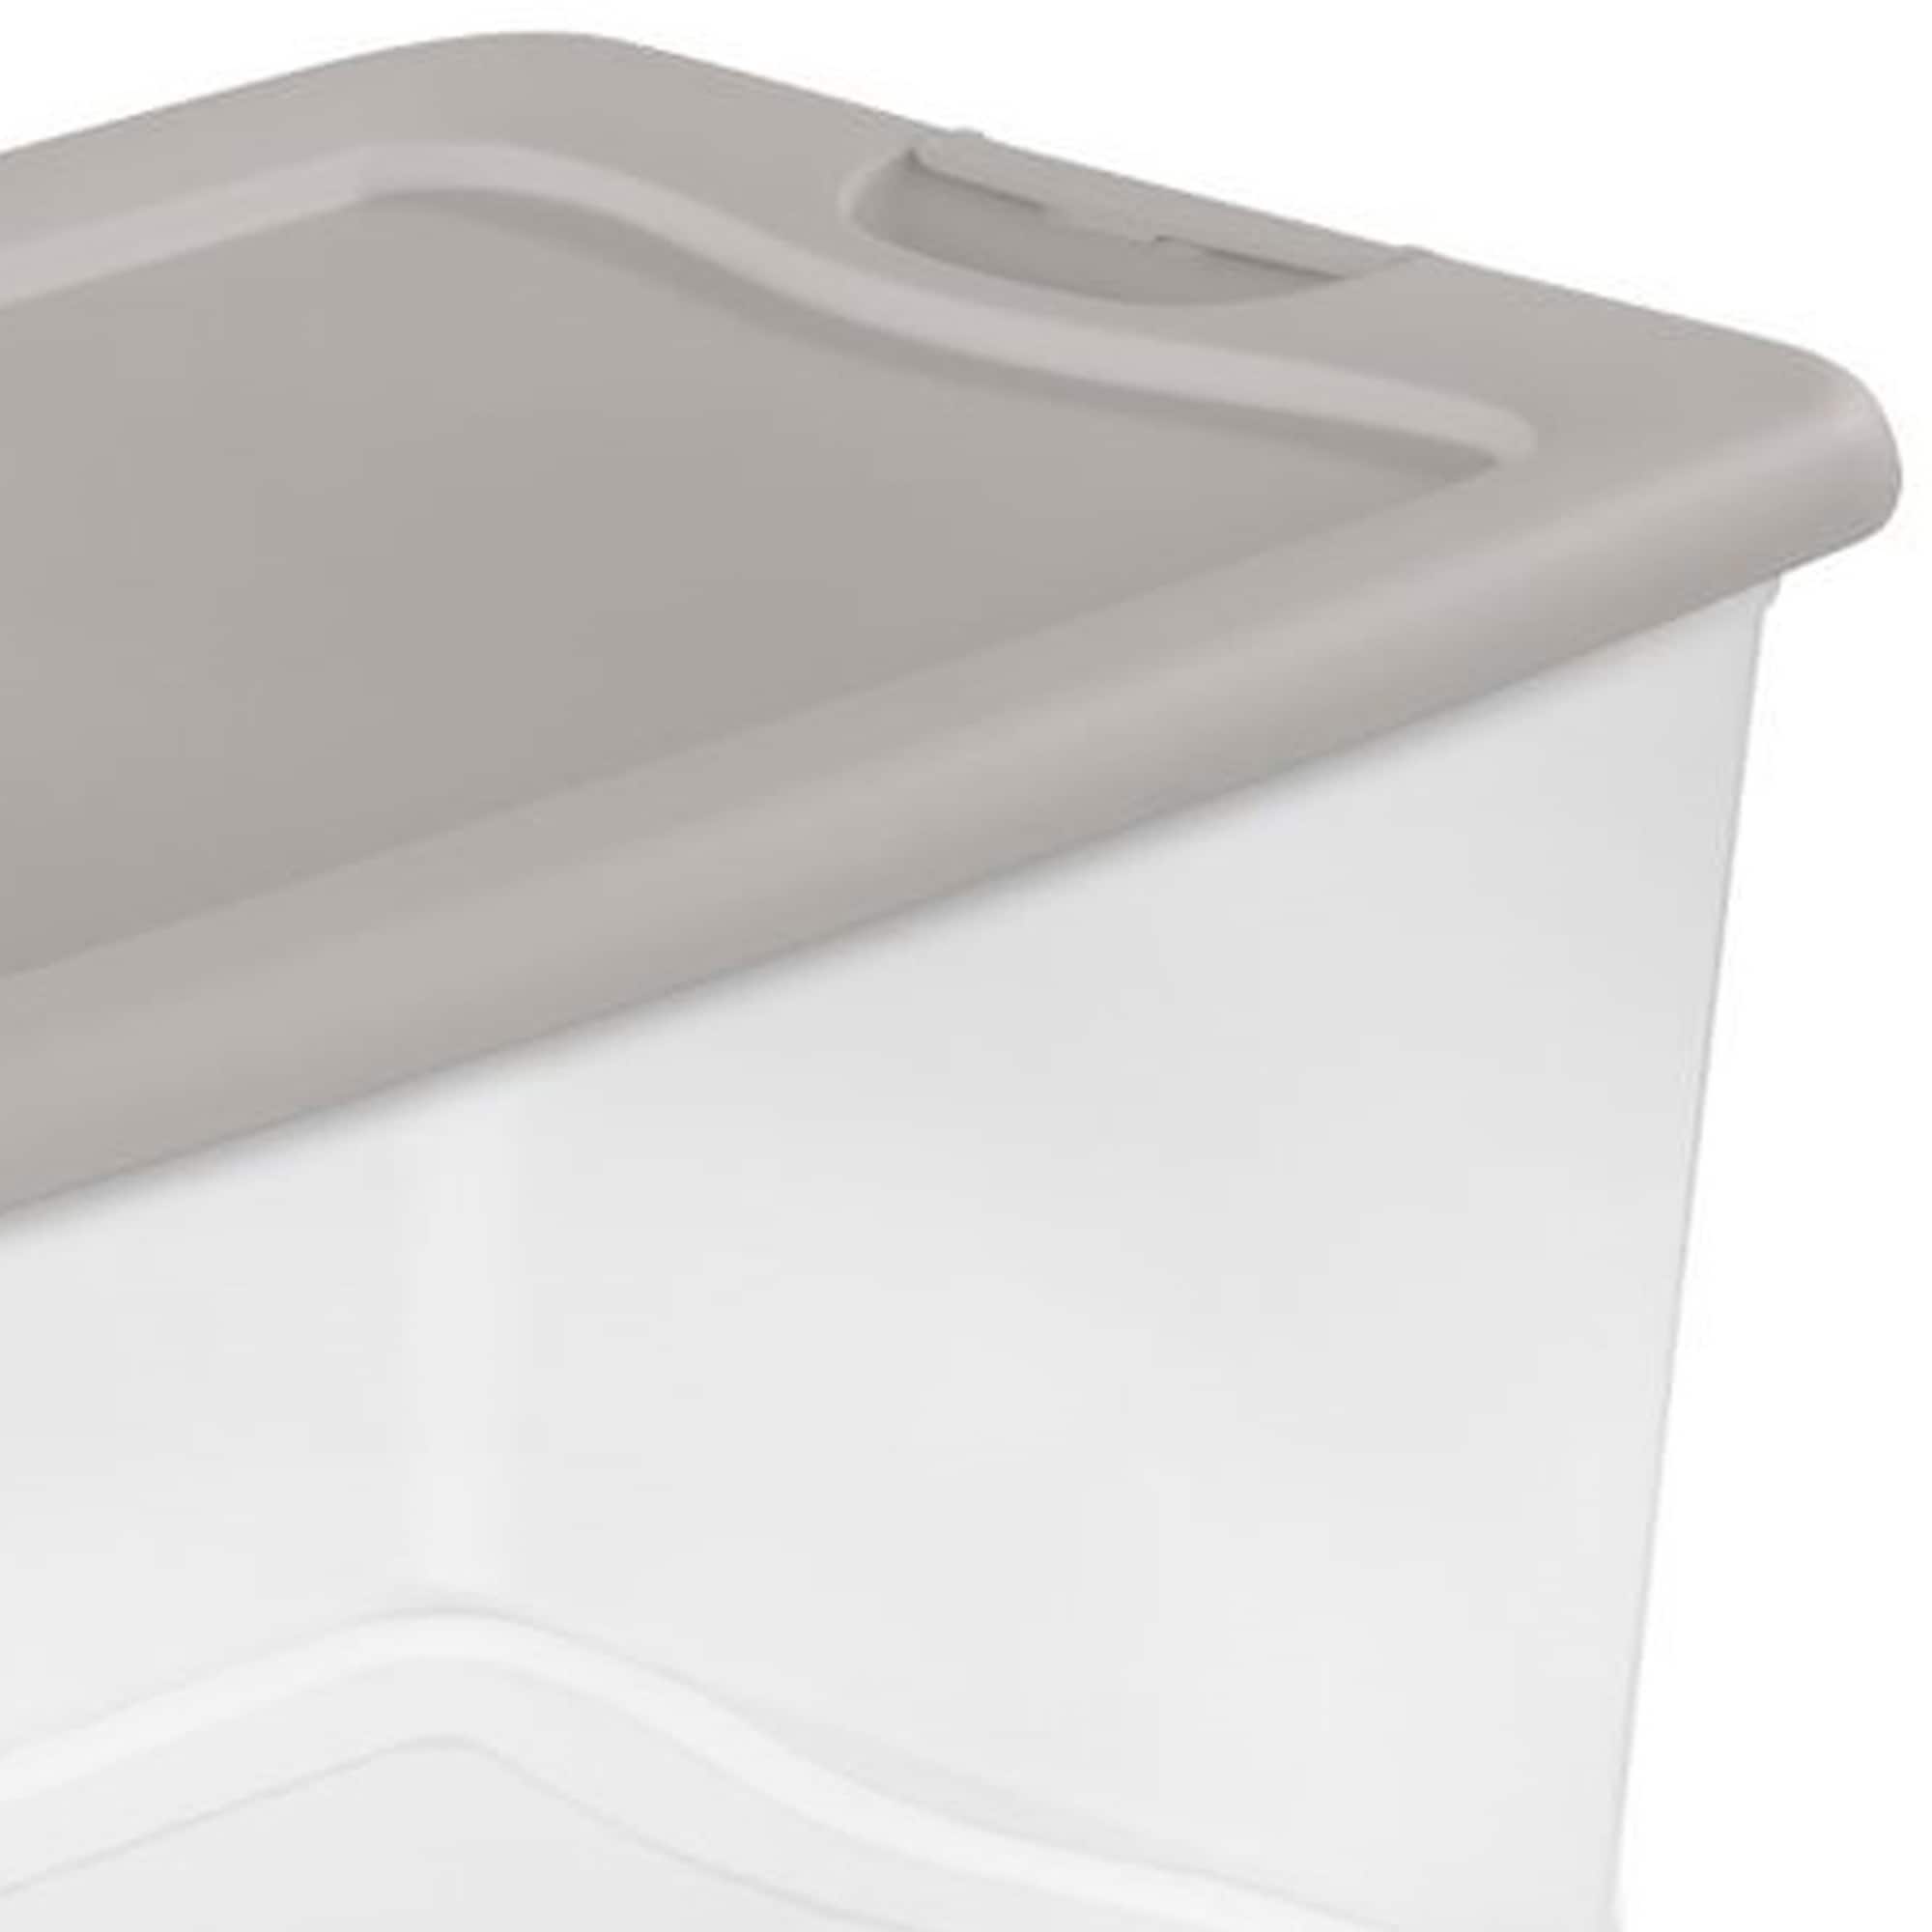 Sterilite 64-Quart Latching Storage Container Box, Grey Pumice (18